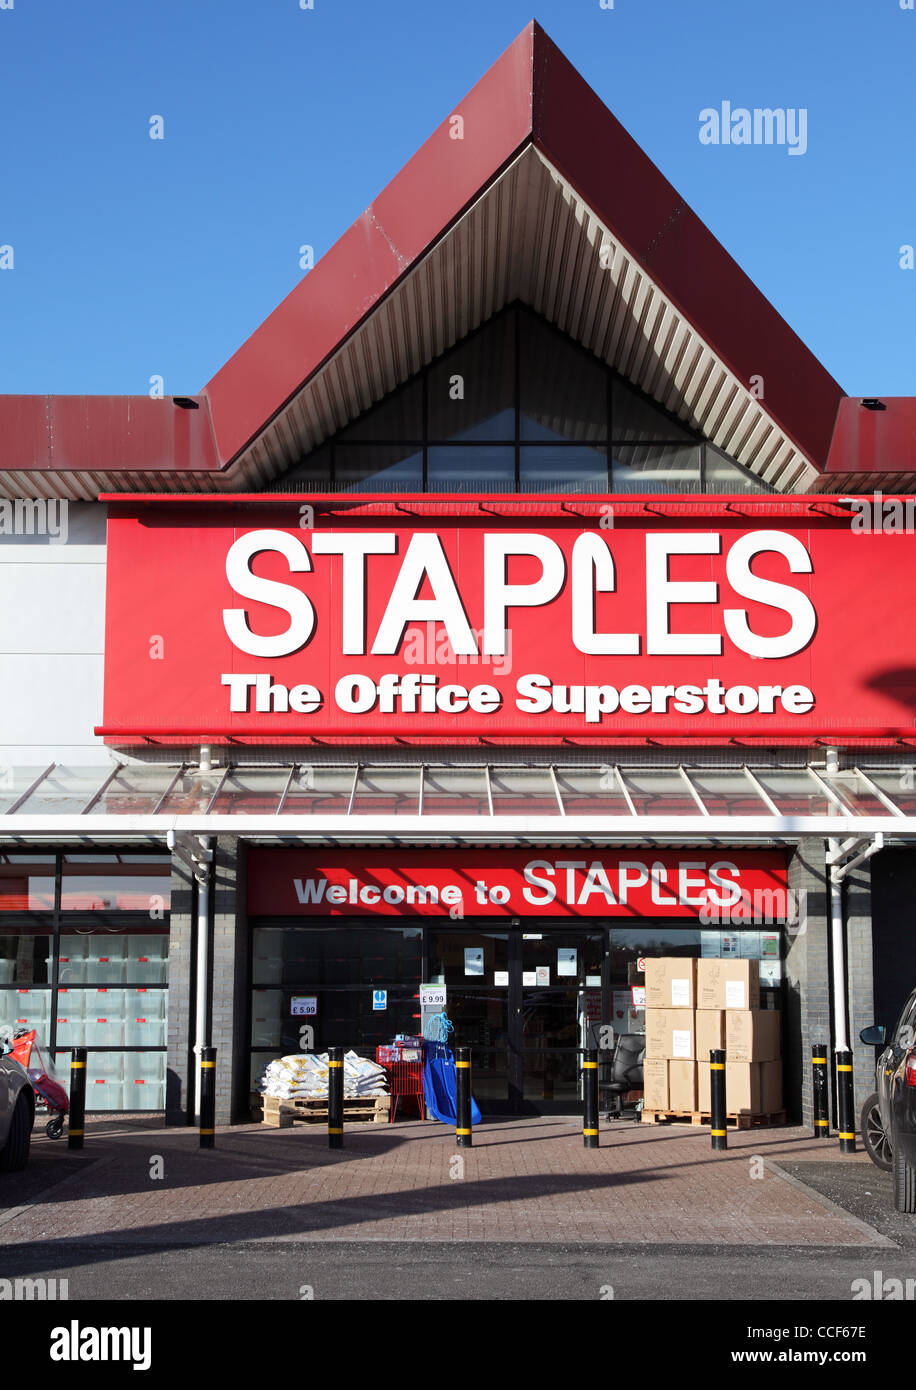 Staples office superstore, Hylton Riverside Retail Park, Sunderland, England UK Stock Photo